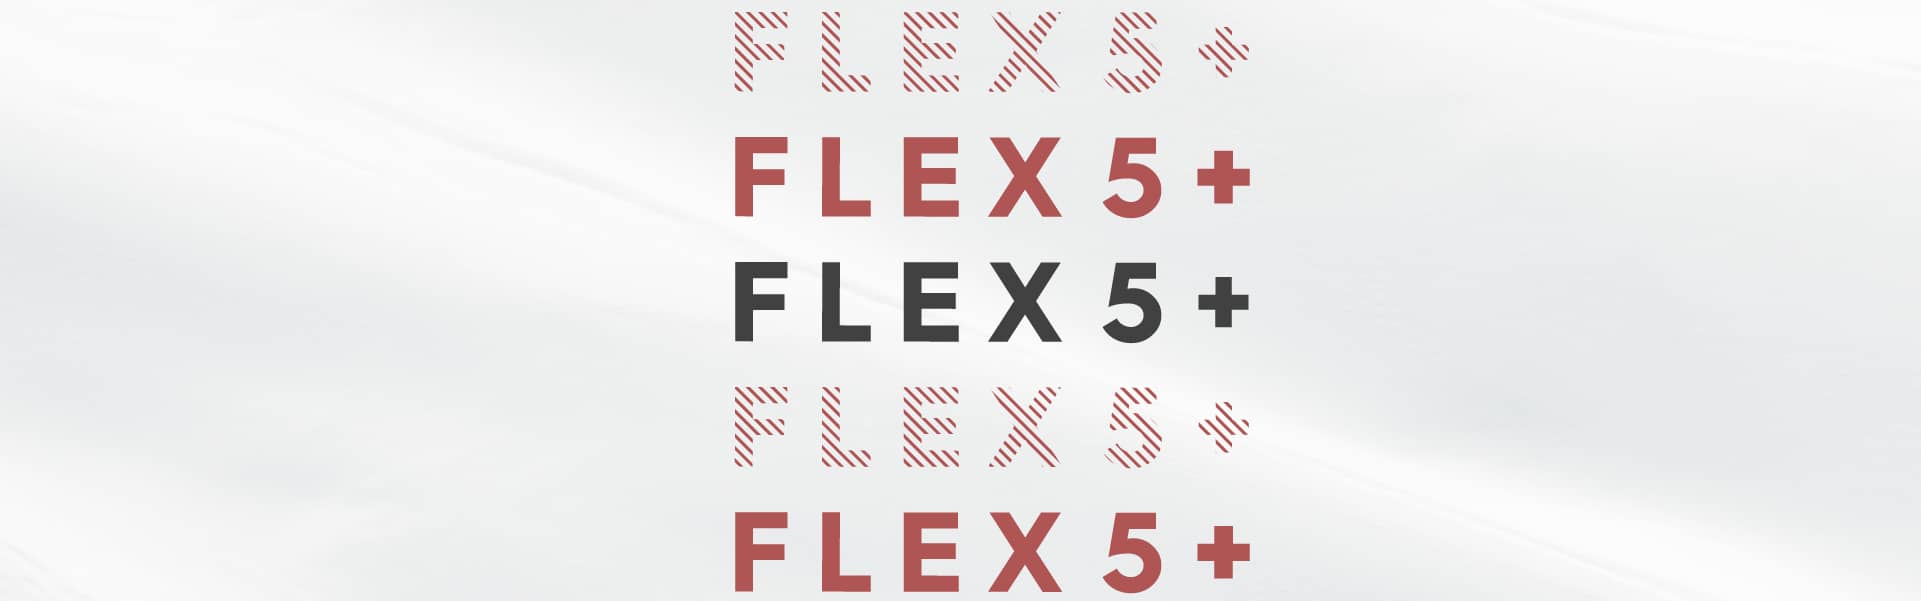 Flex 5 + Pass Image